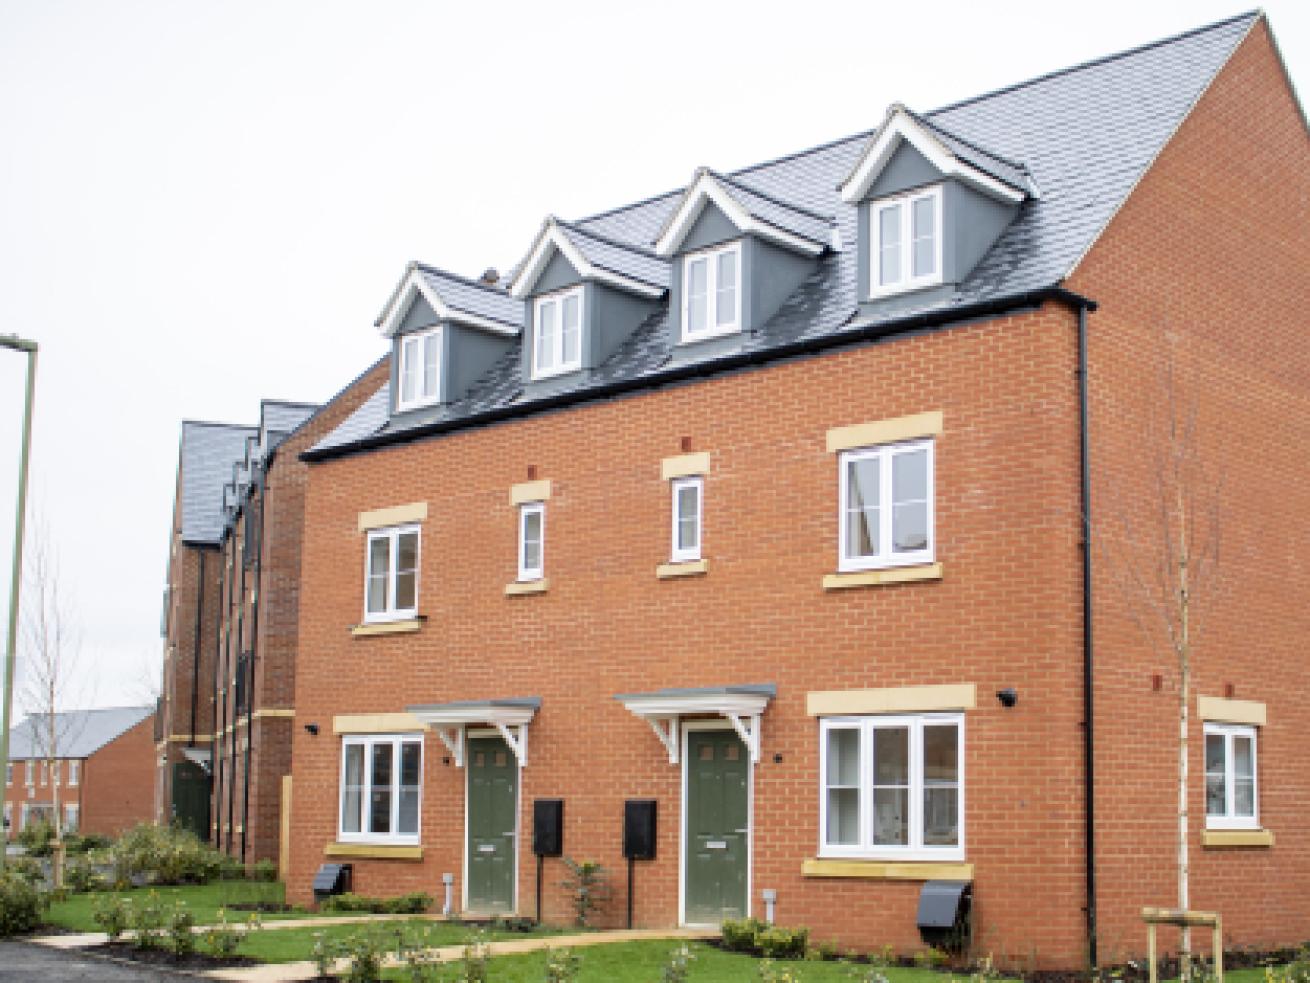 Red brick semi detached houses at the Bidford Leys development